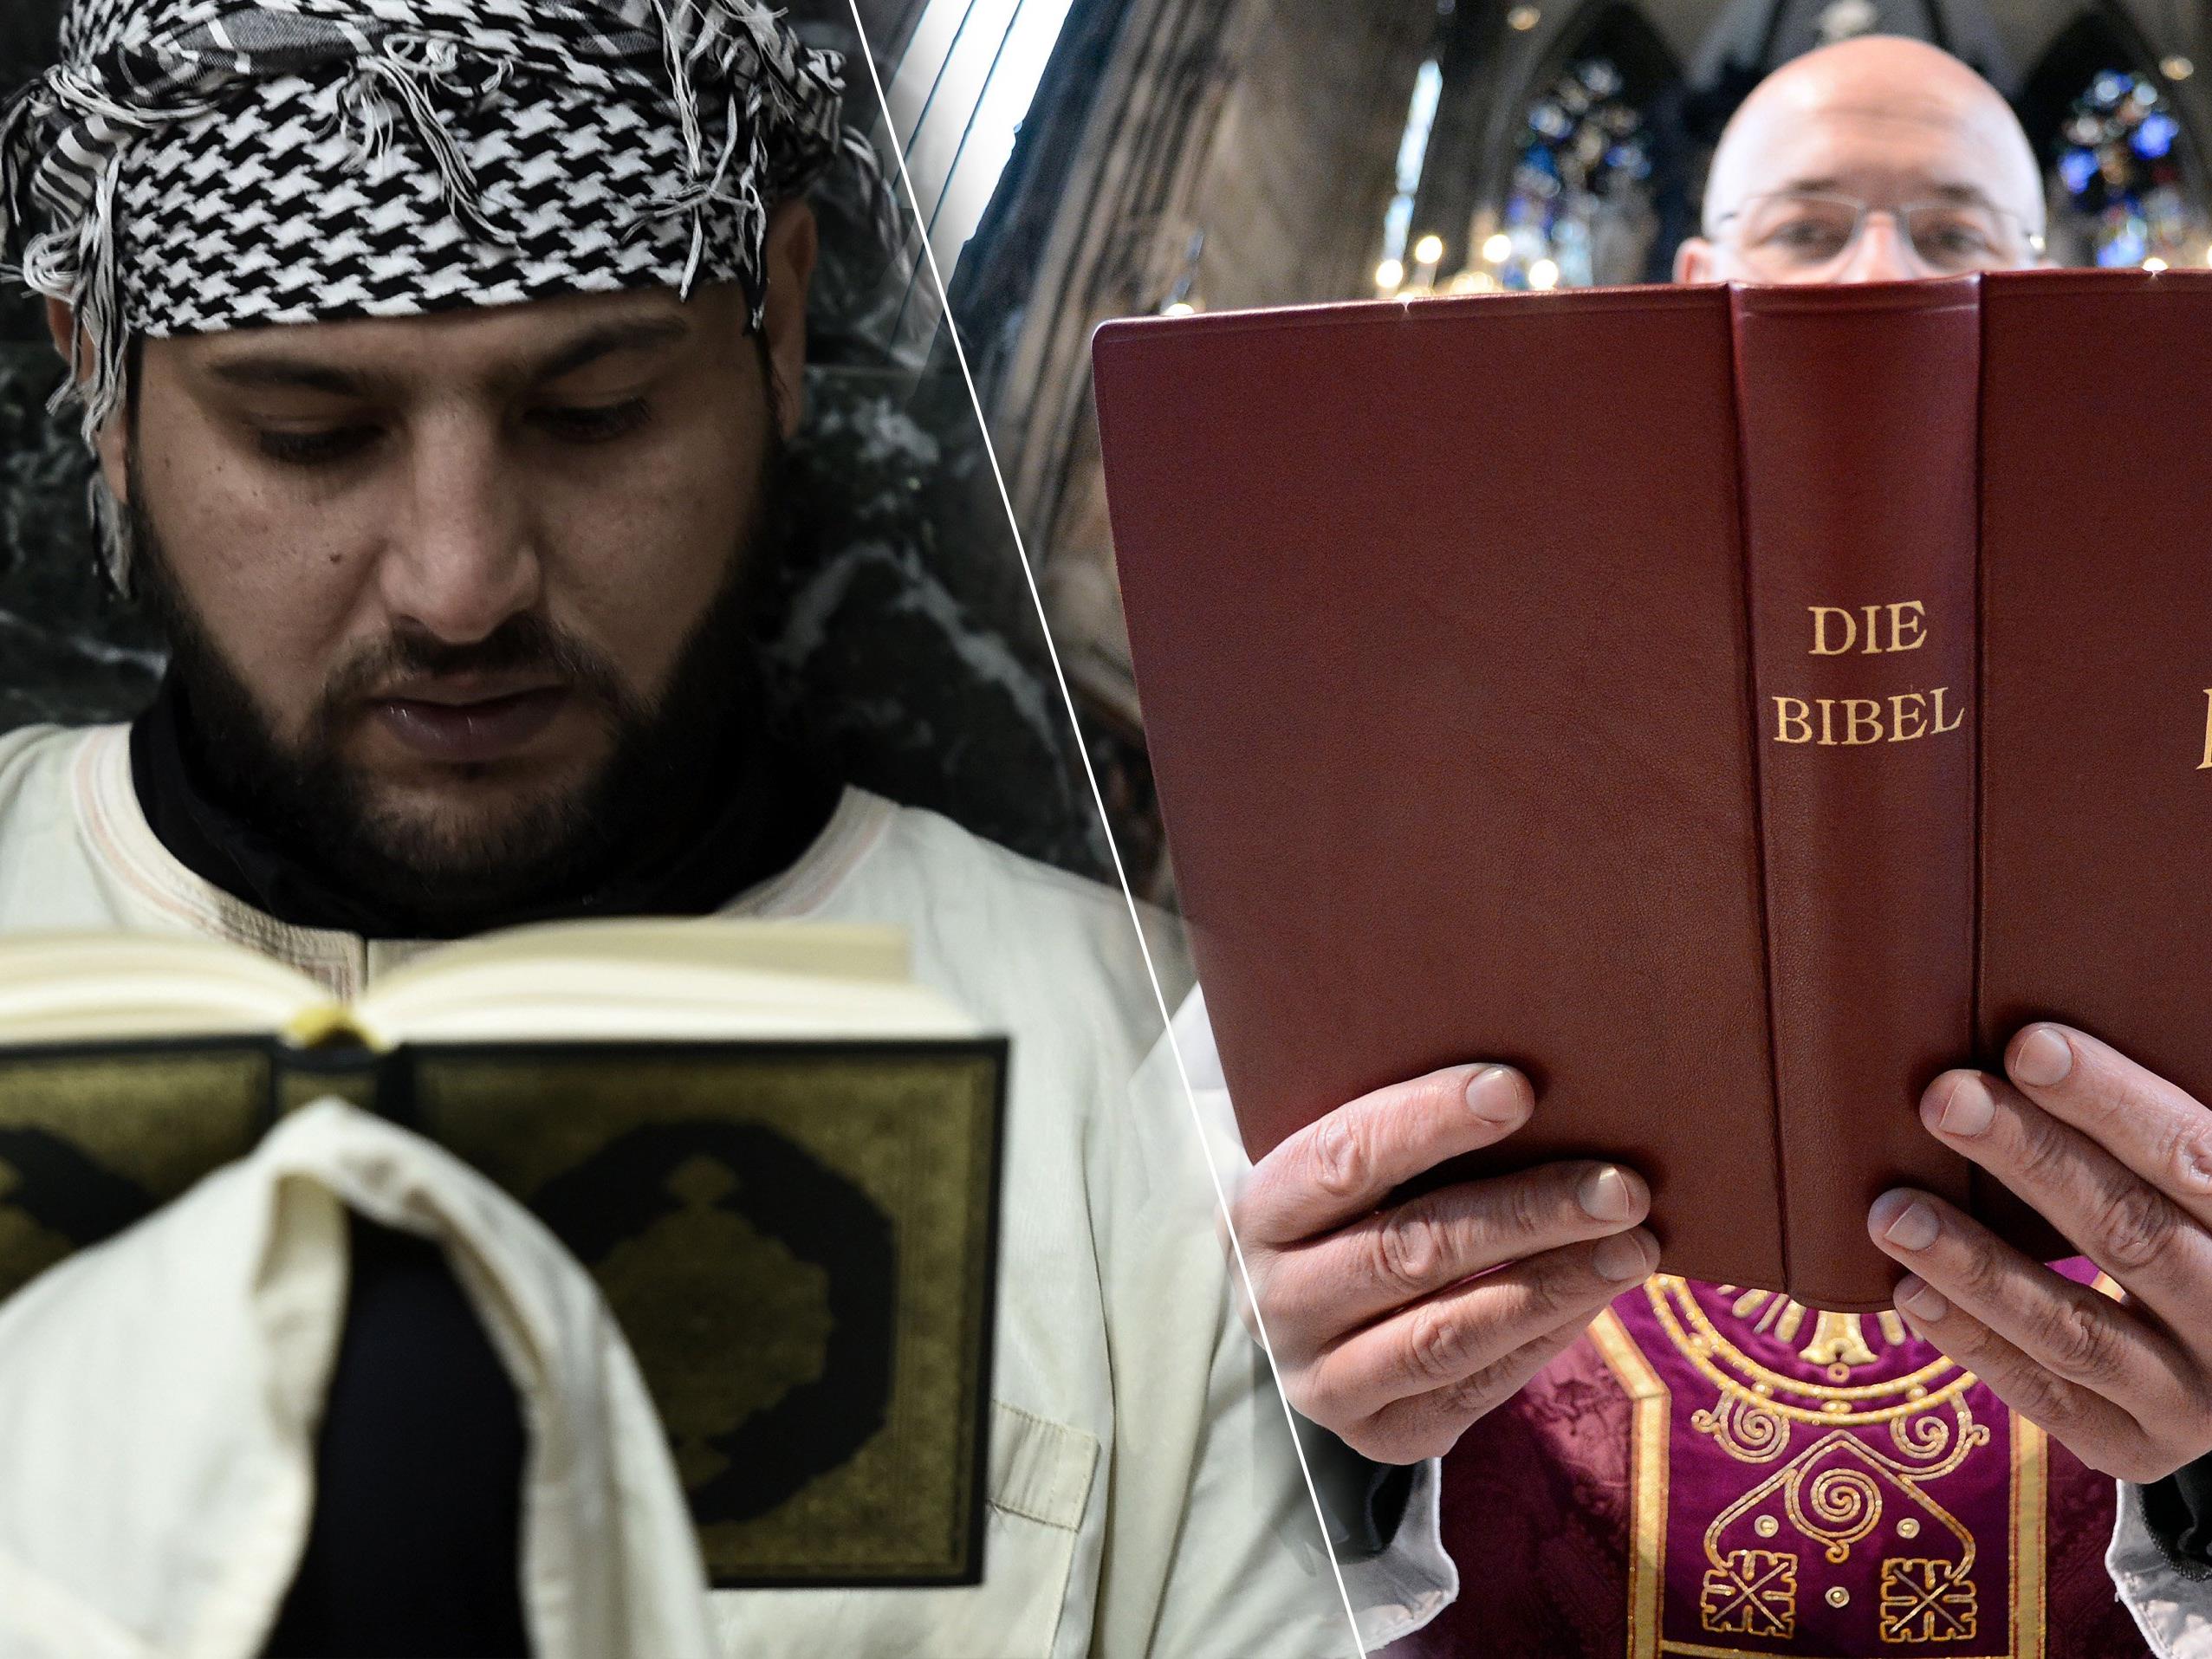 Bibel oder Koran?